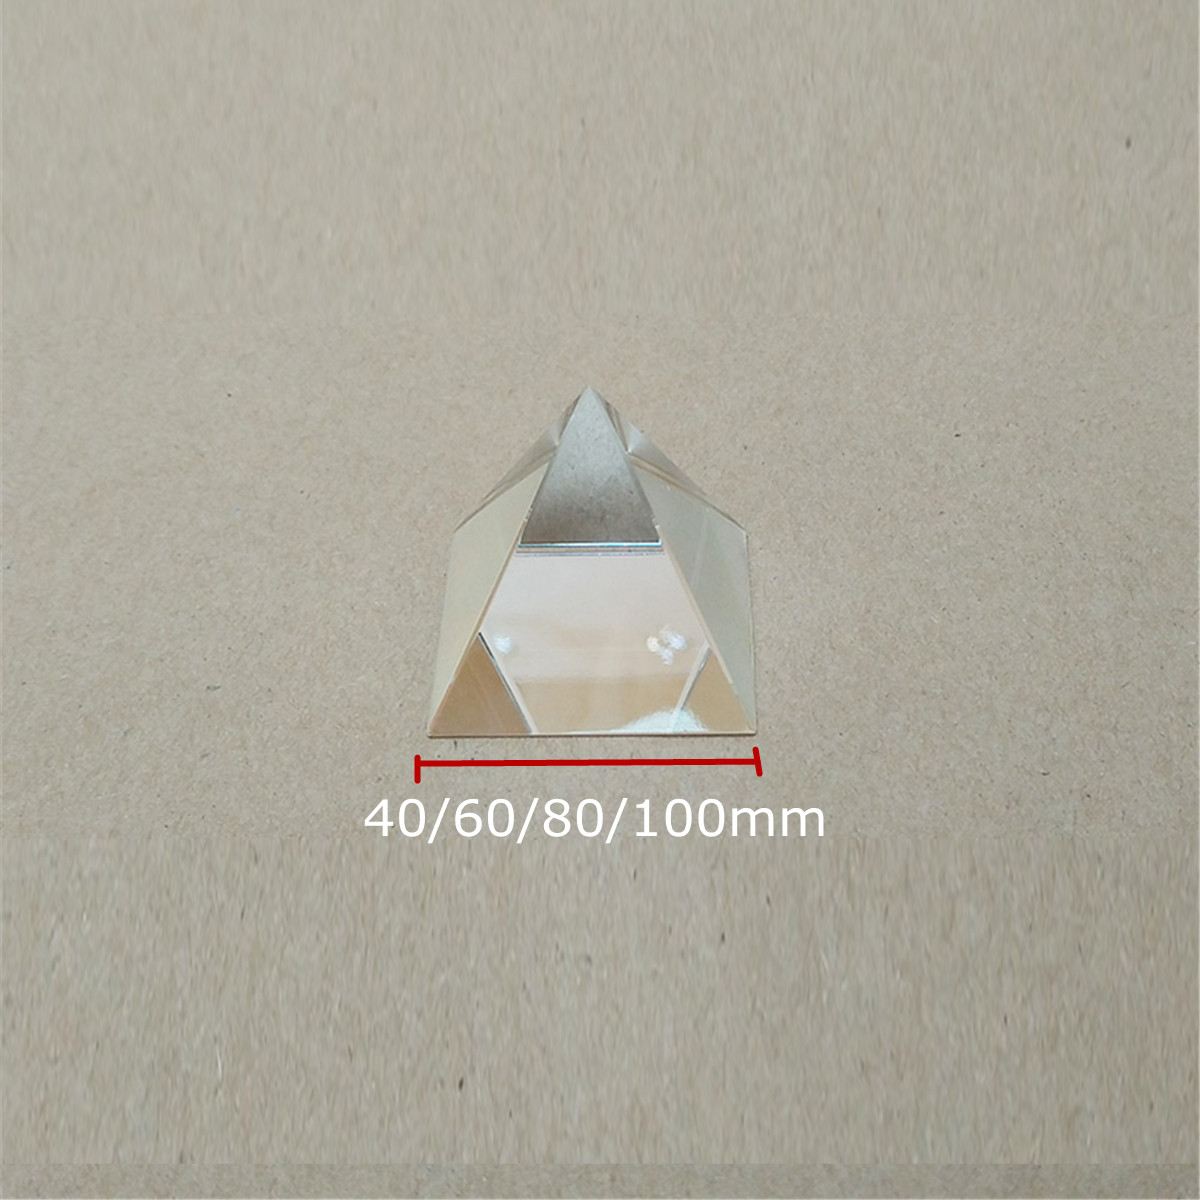 40/60/80/100mm Clear Optical Glass Pyramid Crystal Prism Optics Decoration Ornament DIY 5